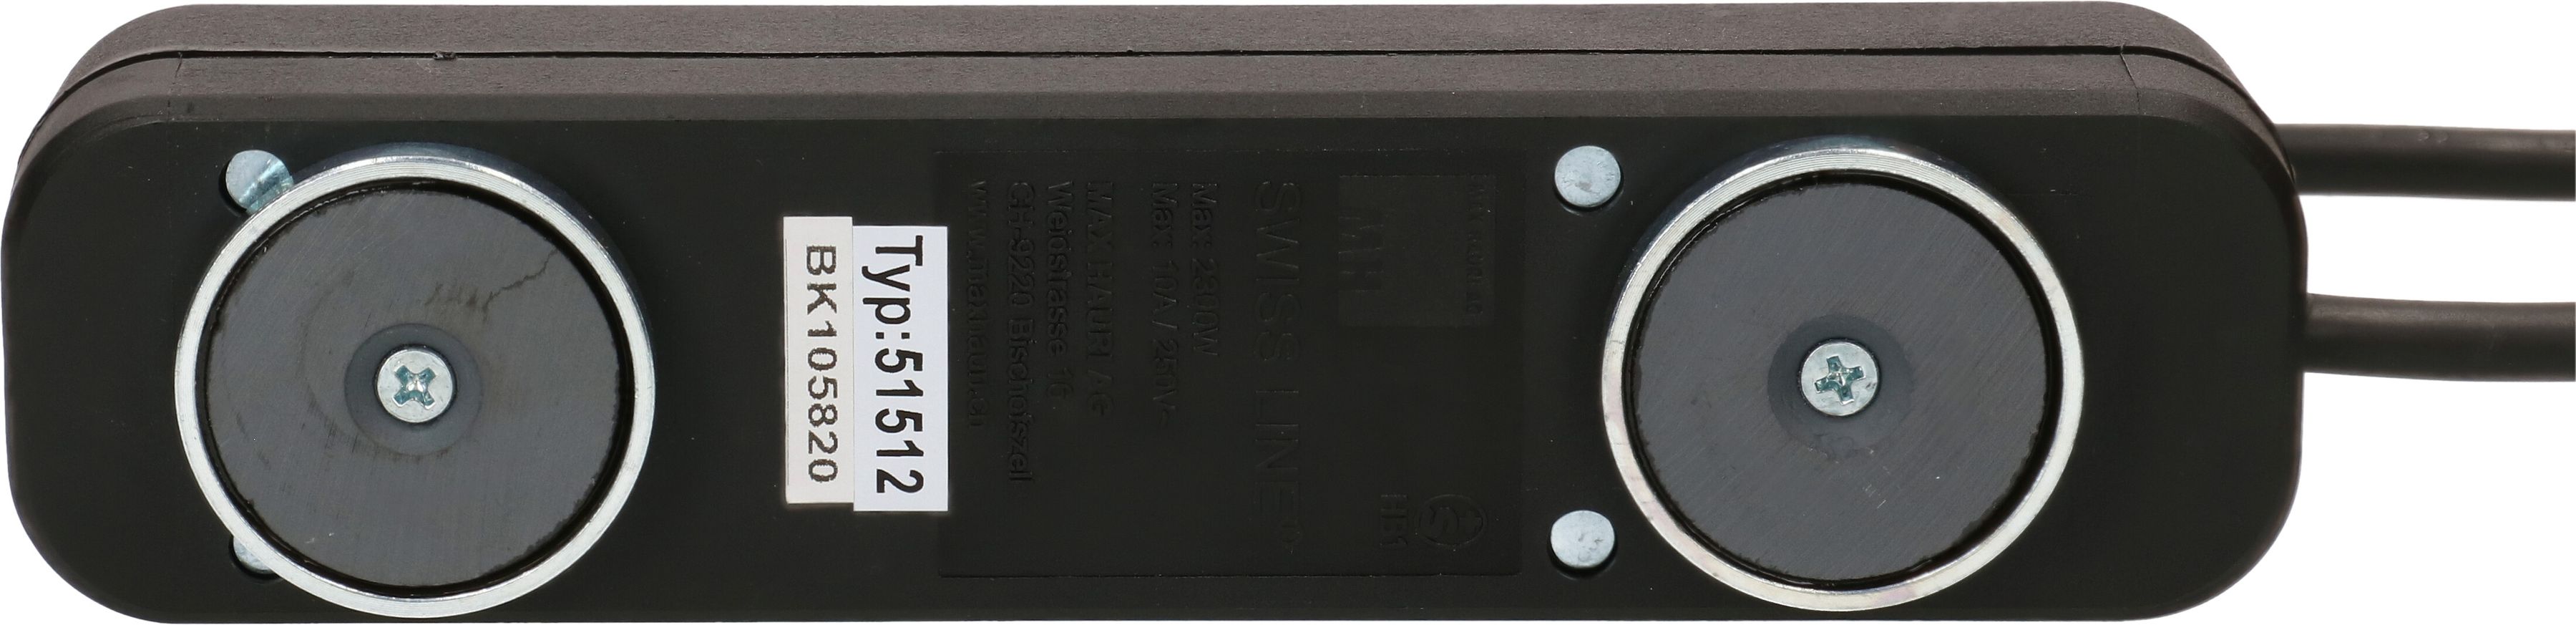 Steckdosenleiste Swiss Line 5x Typ 13 schwarz Magnet